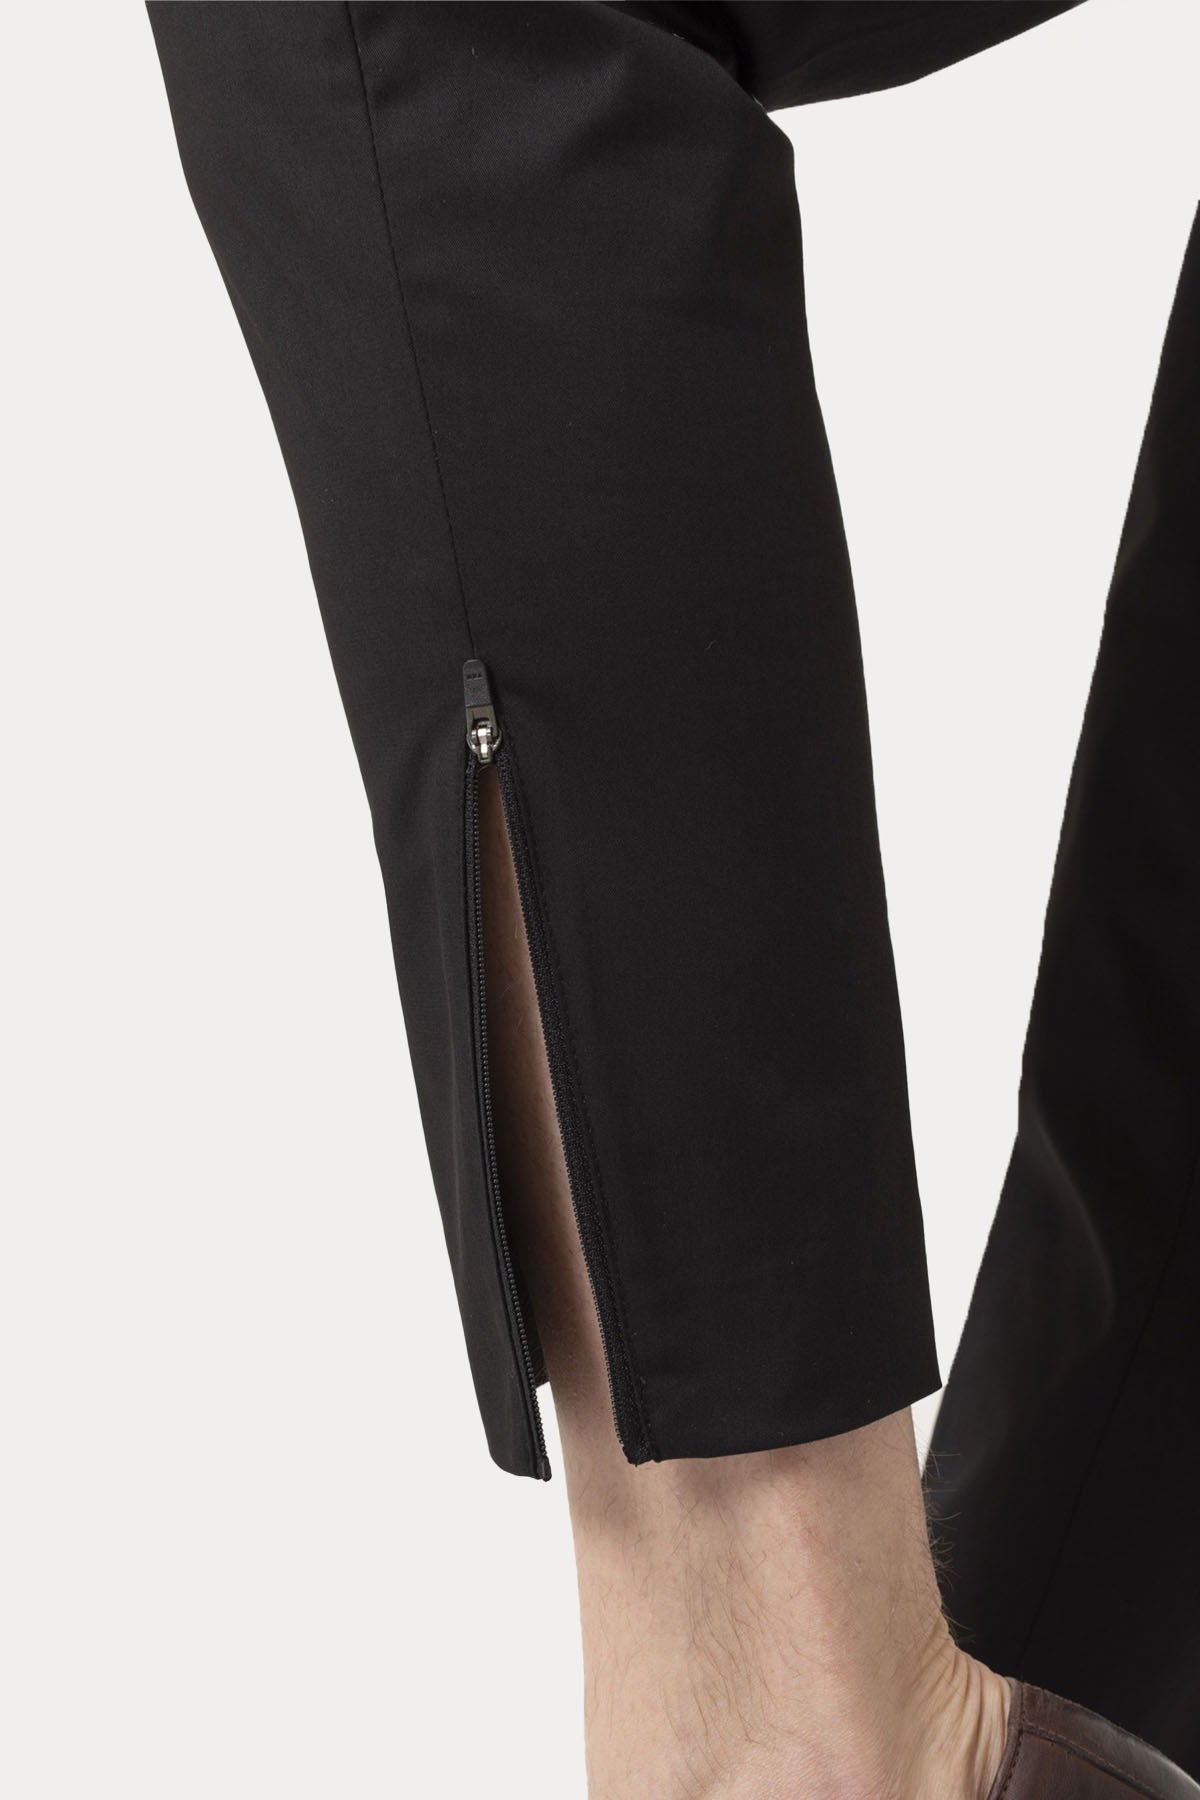 Pantaloni Torino Epsilon Yandan Cepli Paçası Fermuarlı Streç Pantolon